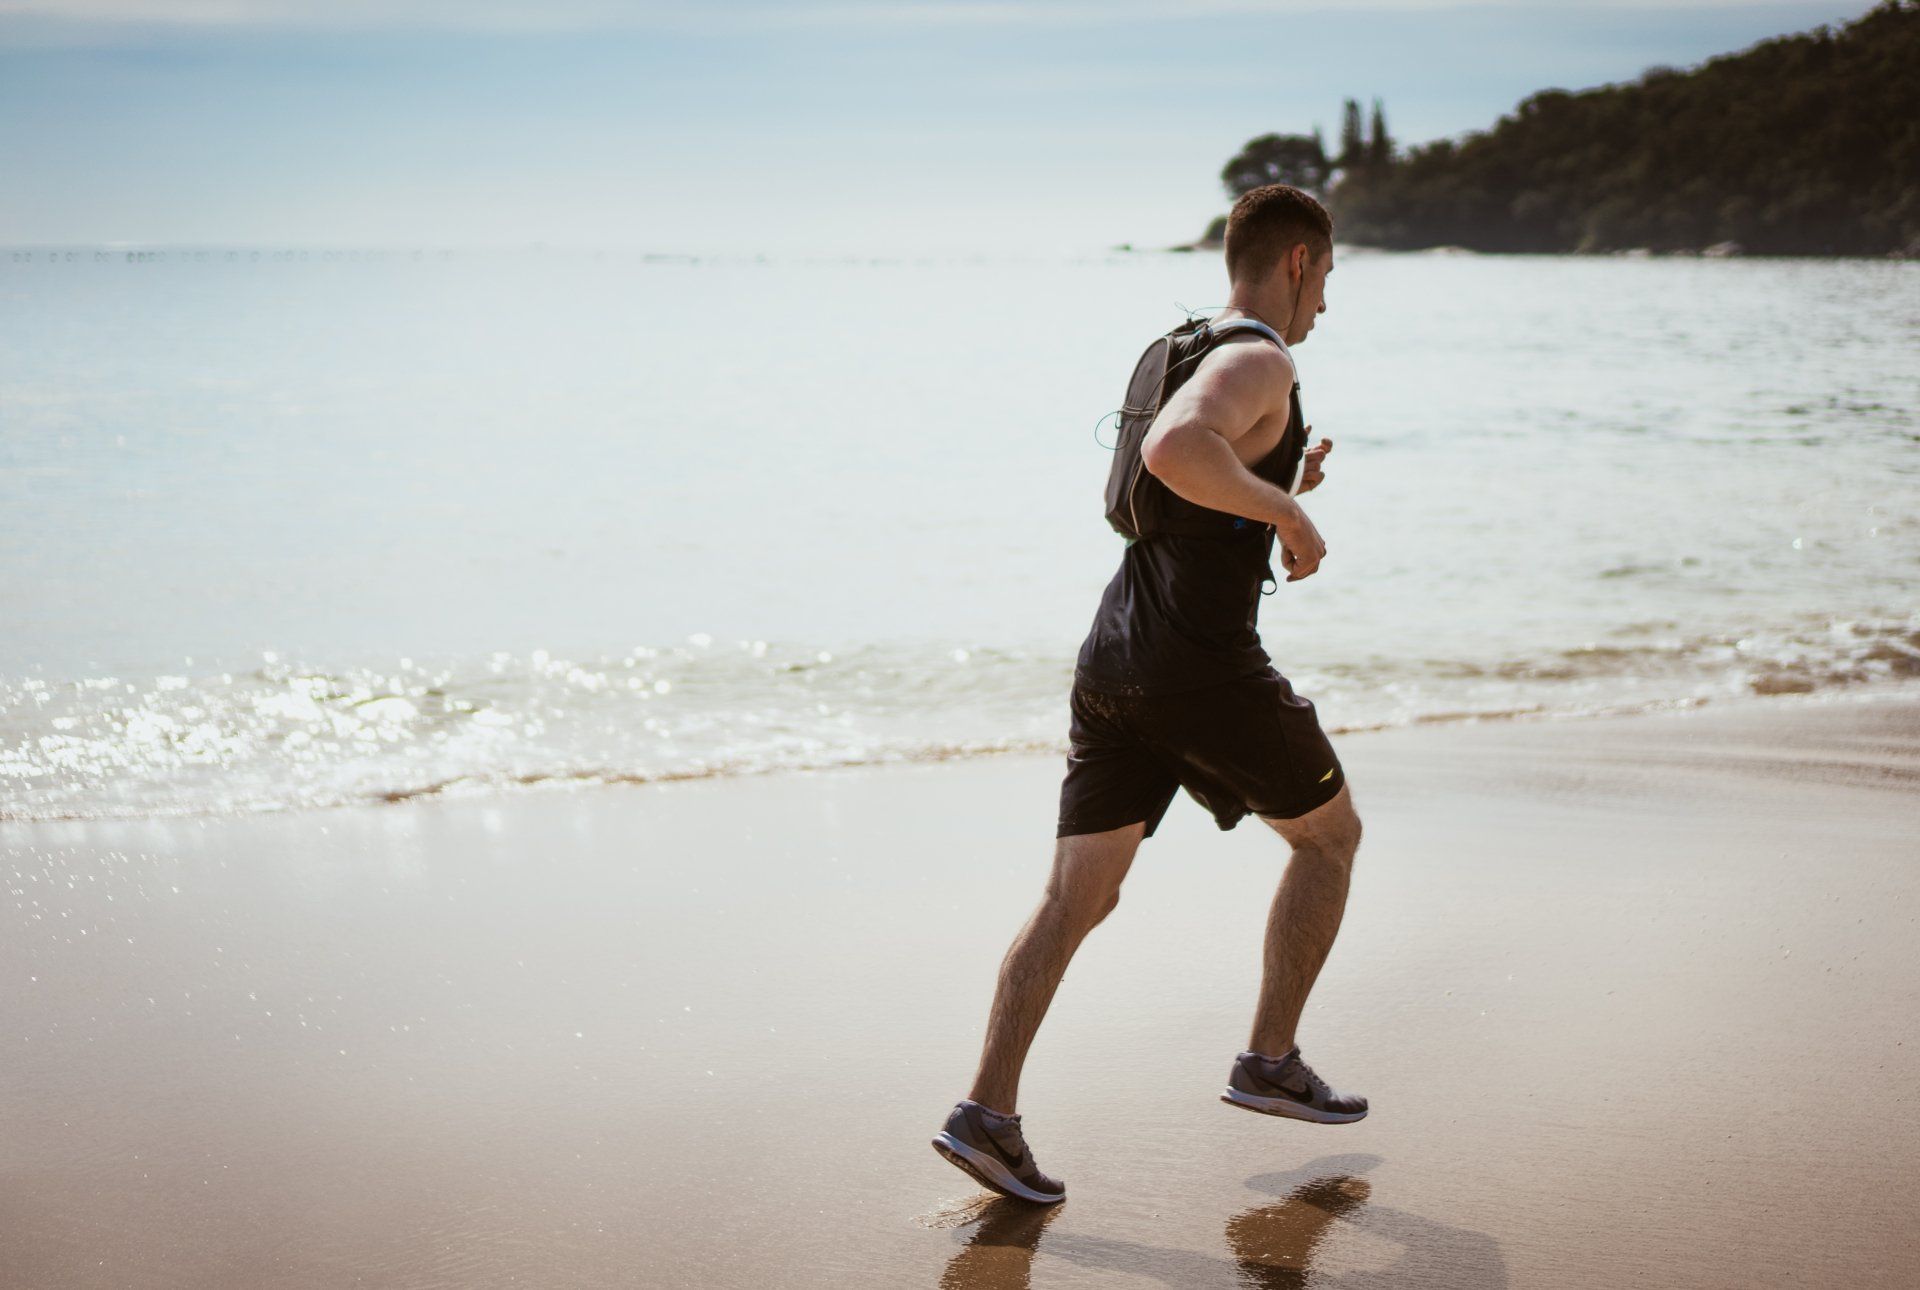 A man running on the beach near the water.